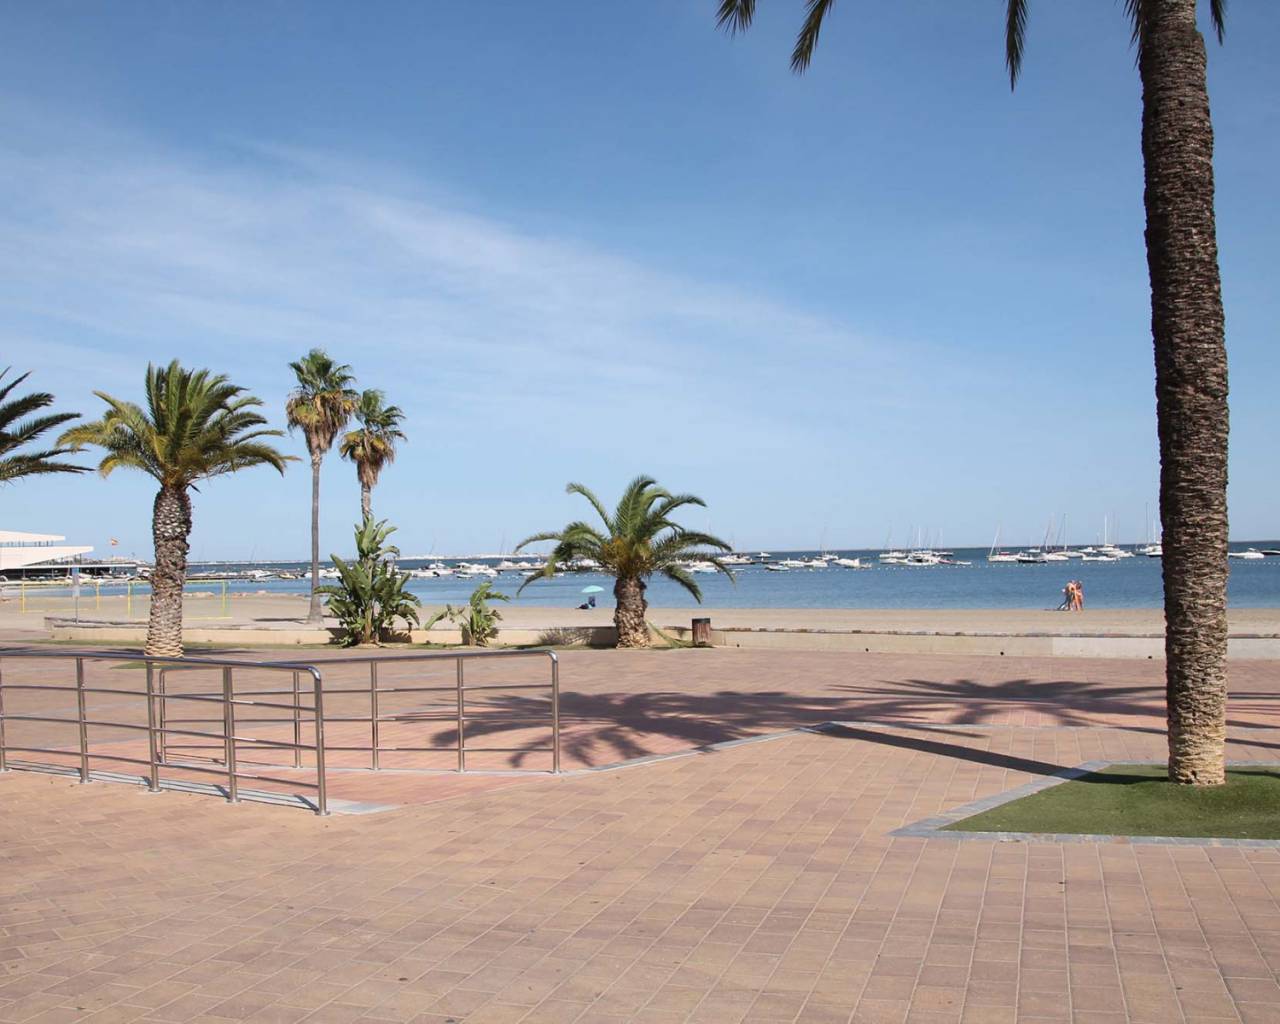 Properties for sale at the Mar Menor in Spain